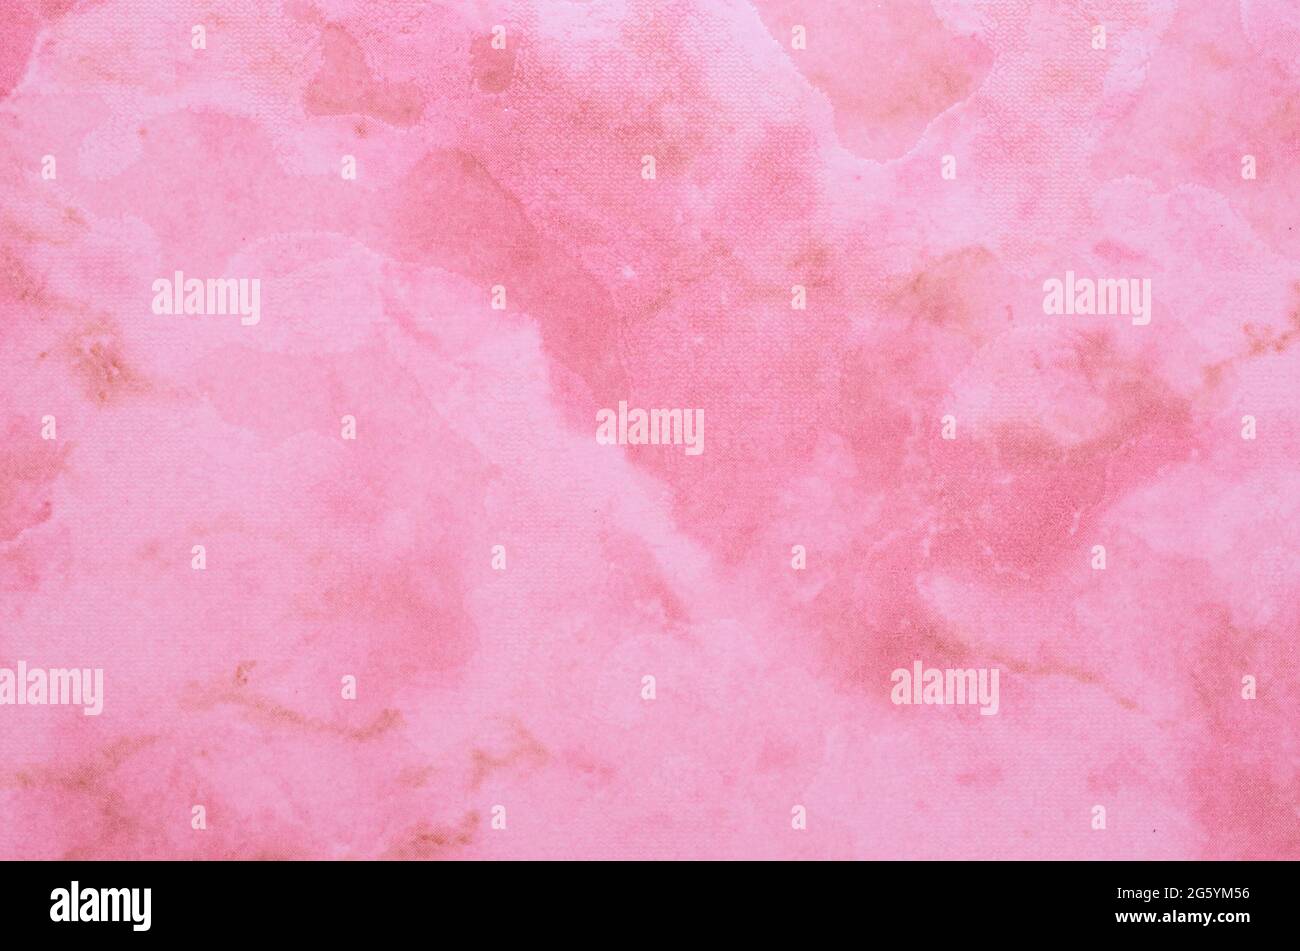 Fond de mur rose avec motif en marbre. Format horizontal Banque D'Images